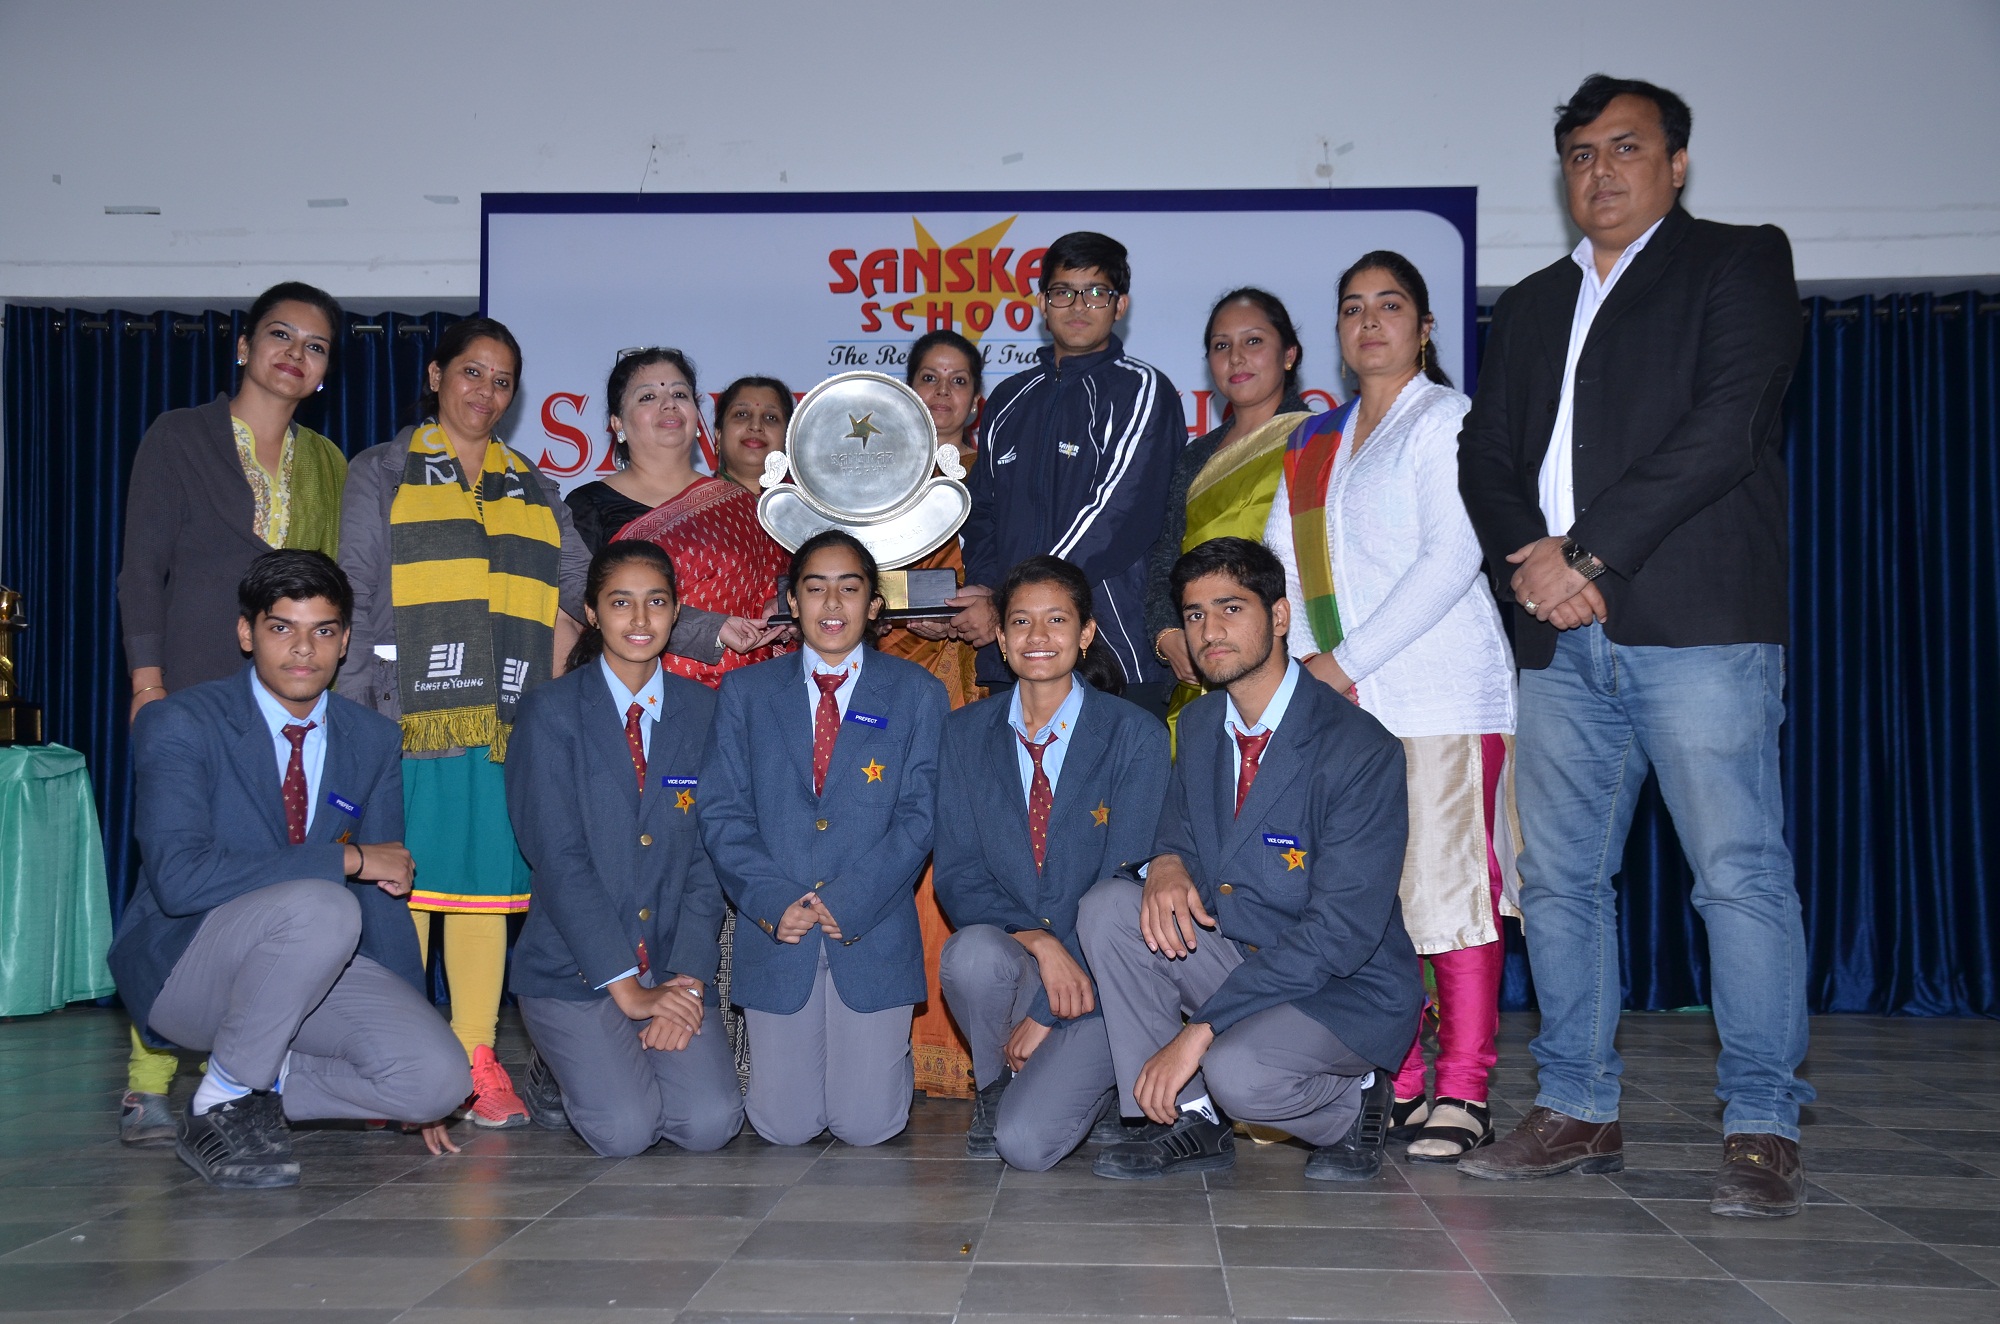 Annual Prize Distribution Function celebrated at Sanskar School